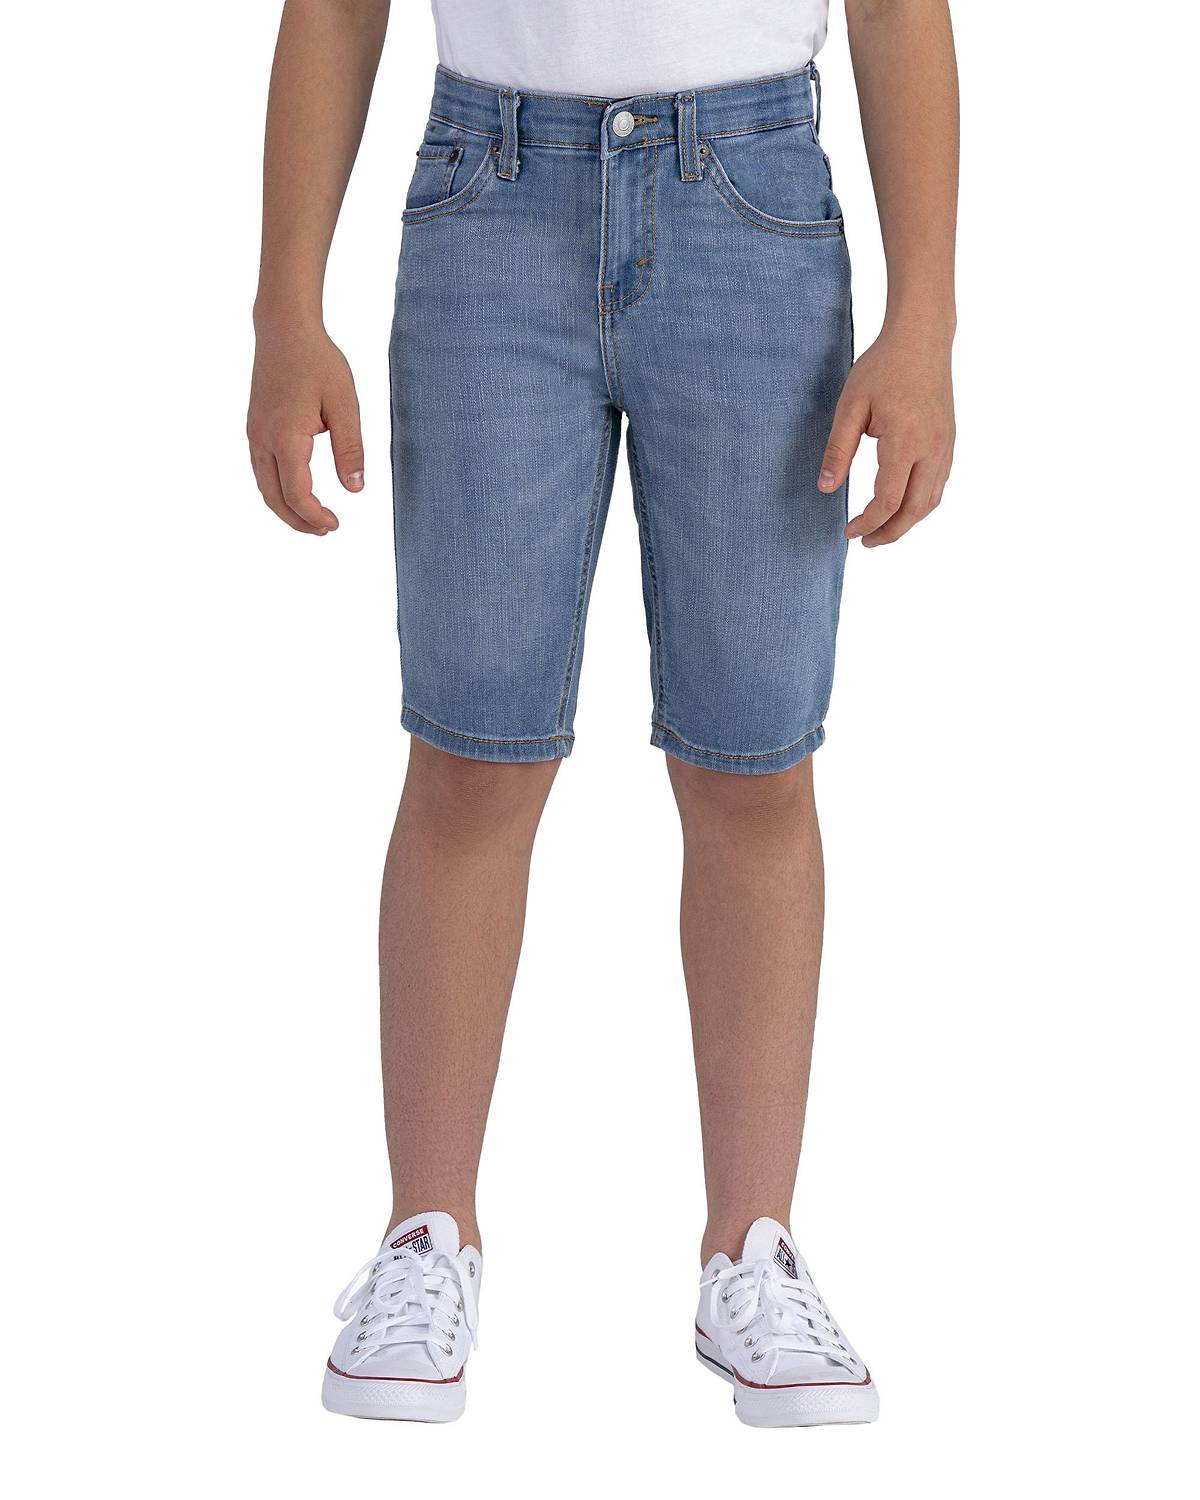 Boy wearing slim knee length shorts